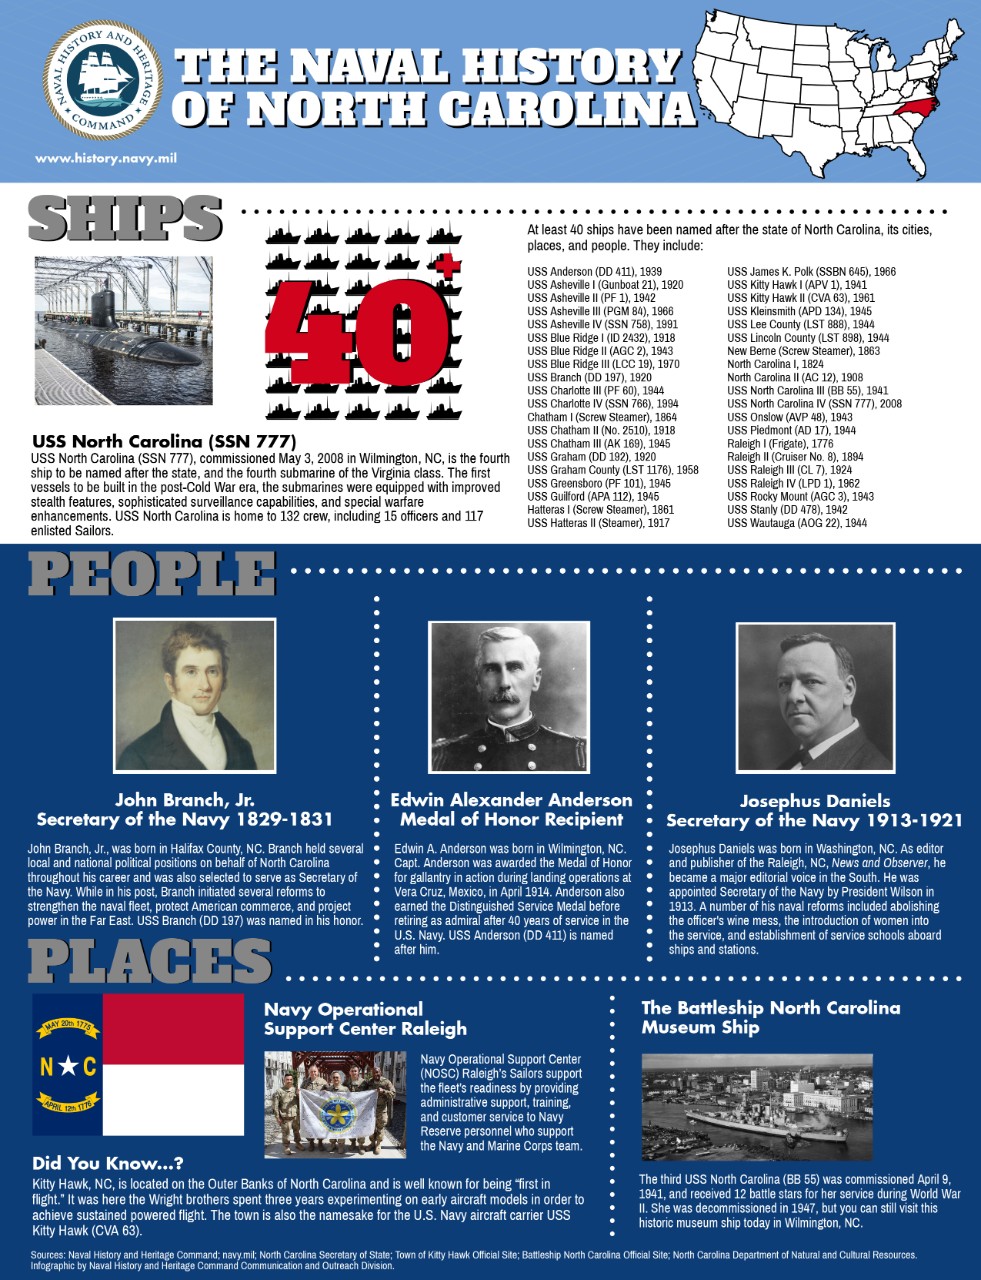 North Carolina's Naval History